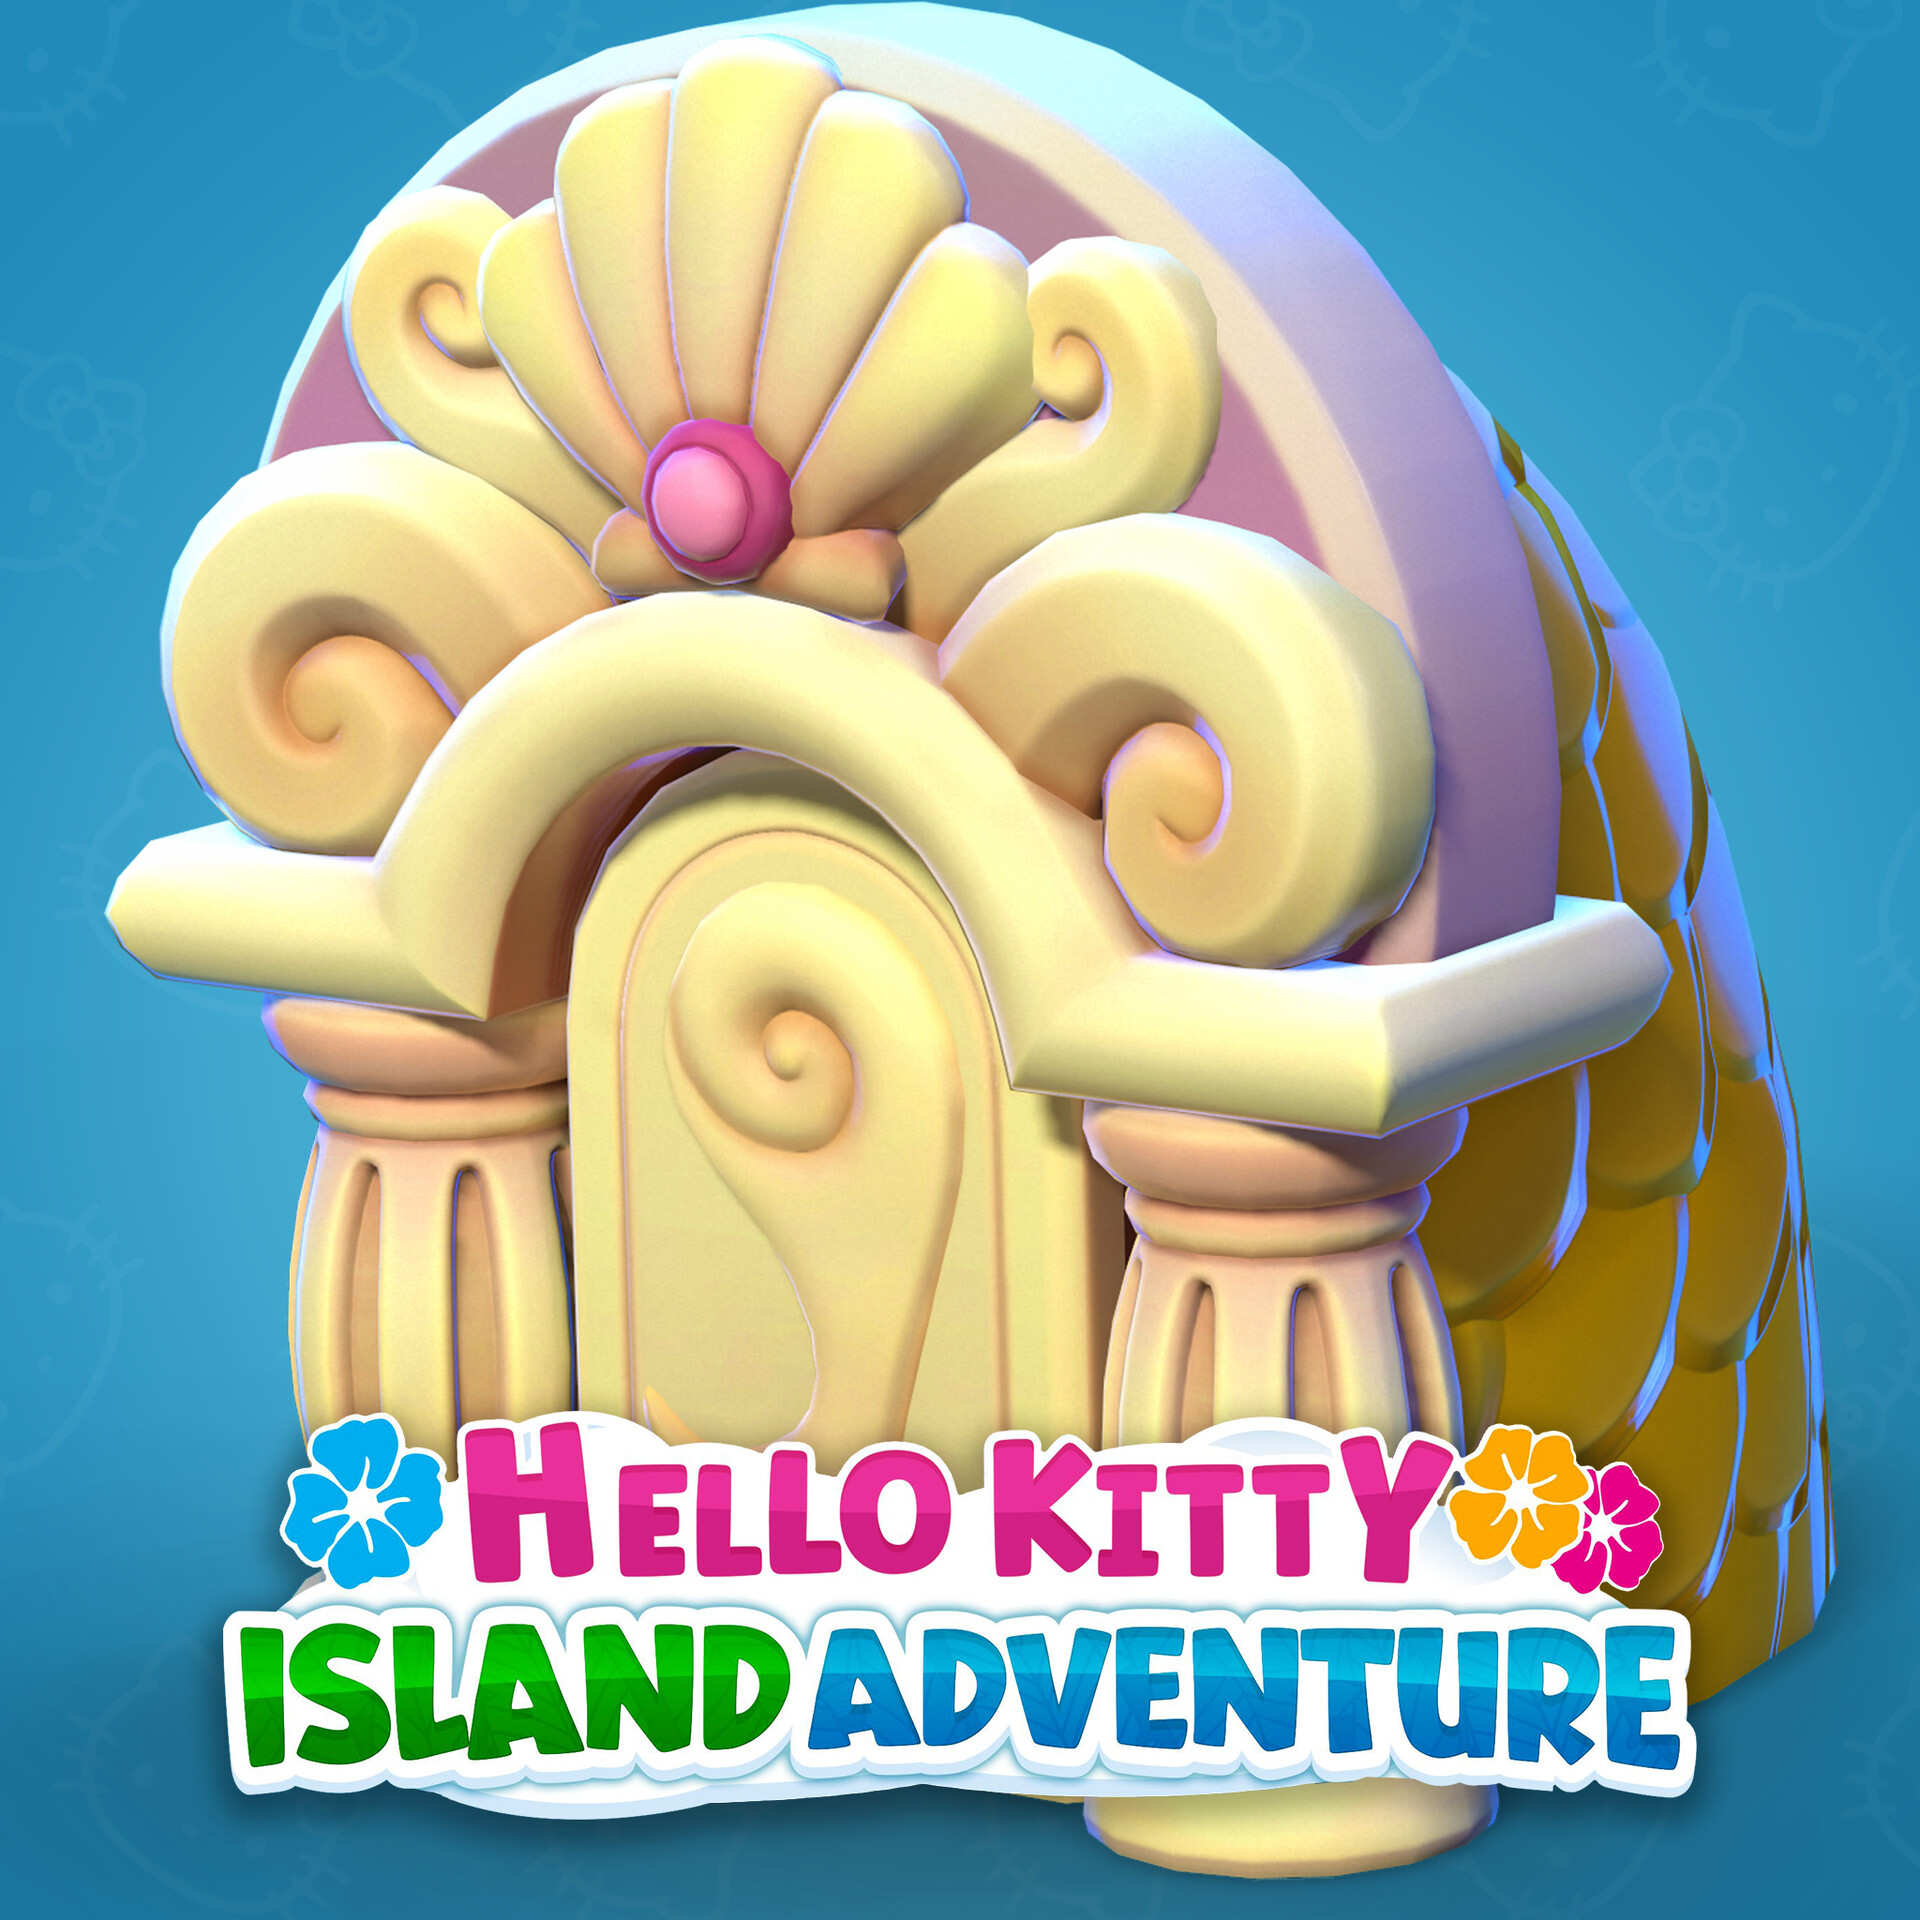 ArtStation - Hello Kitty Island Adventure - Gem Match Game / Dance